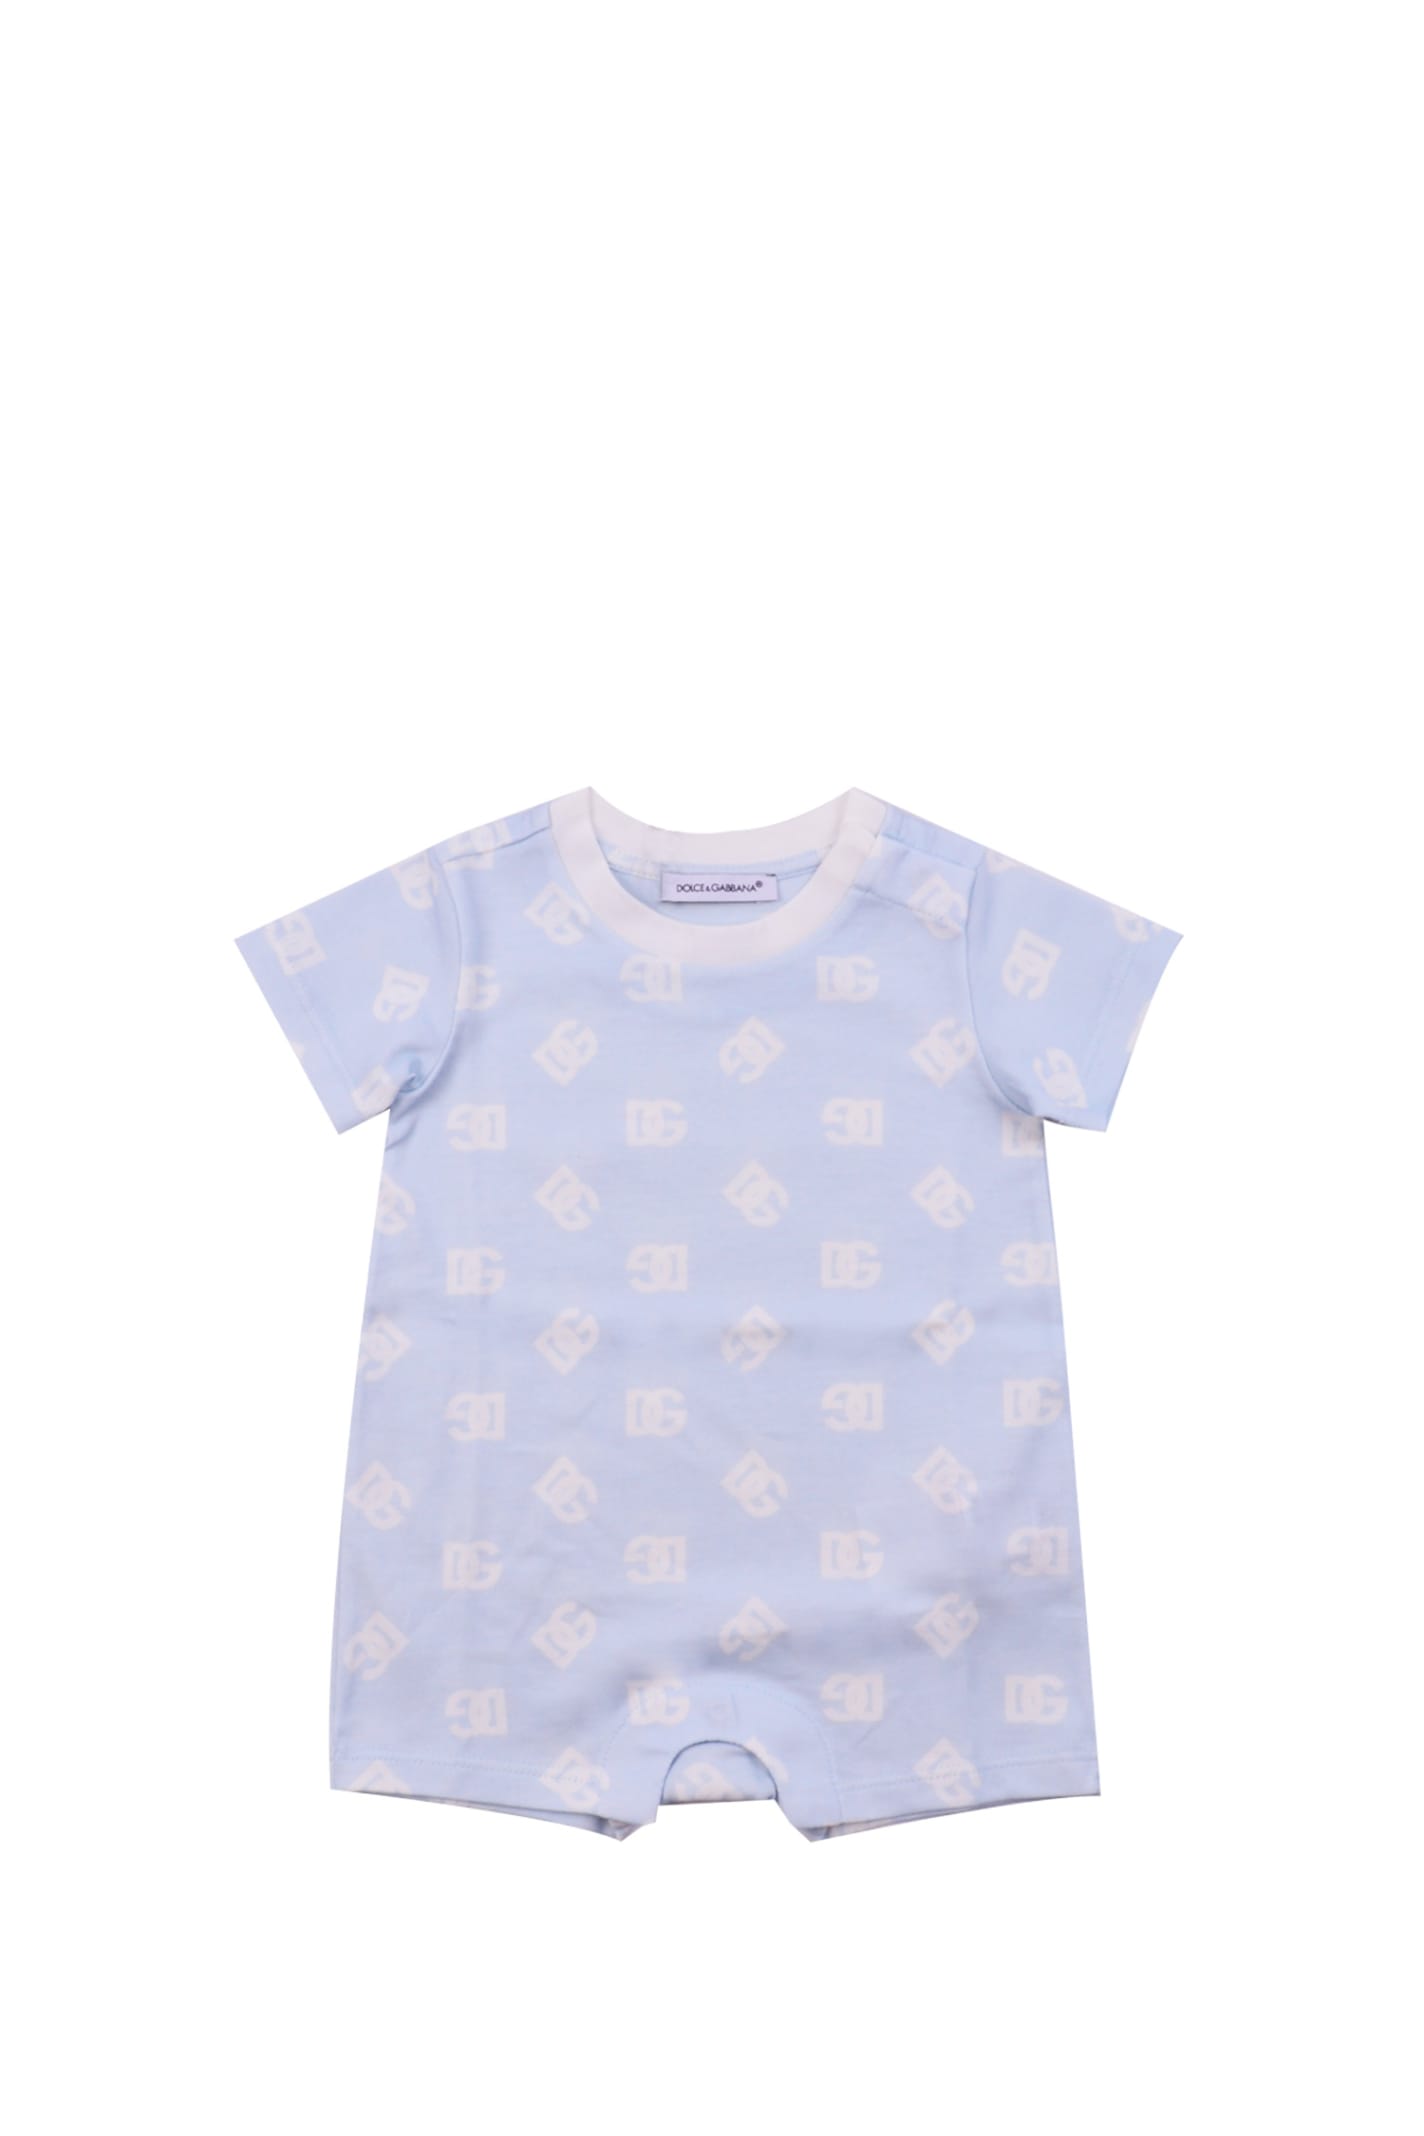 Dolce & Gabbana Babies' Logo Print Cotton Romper In Light Blue